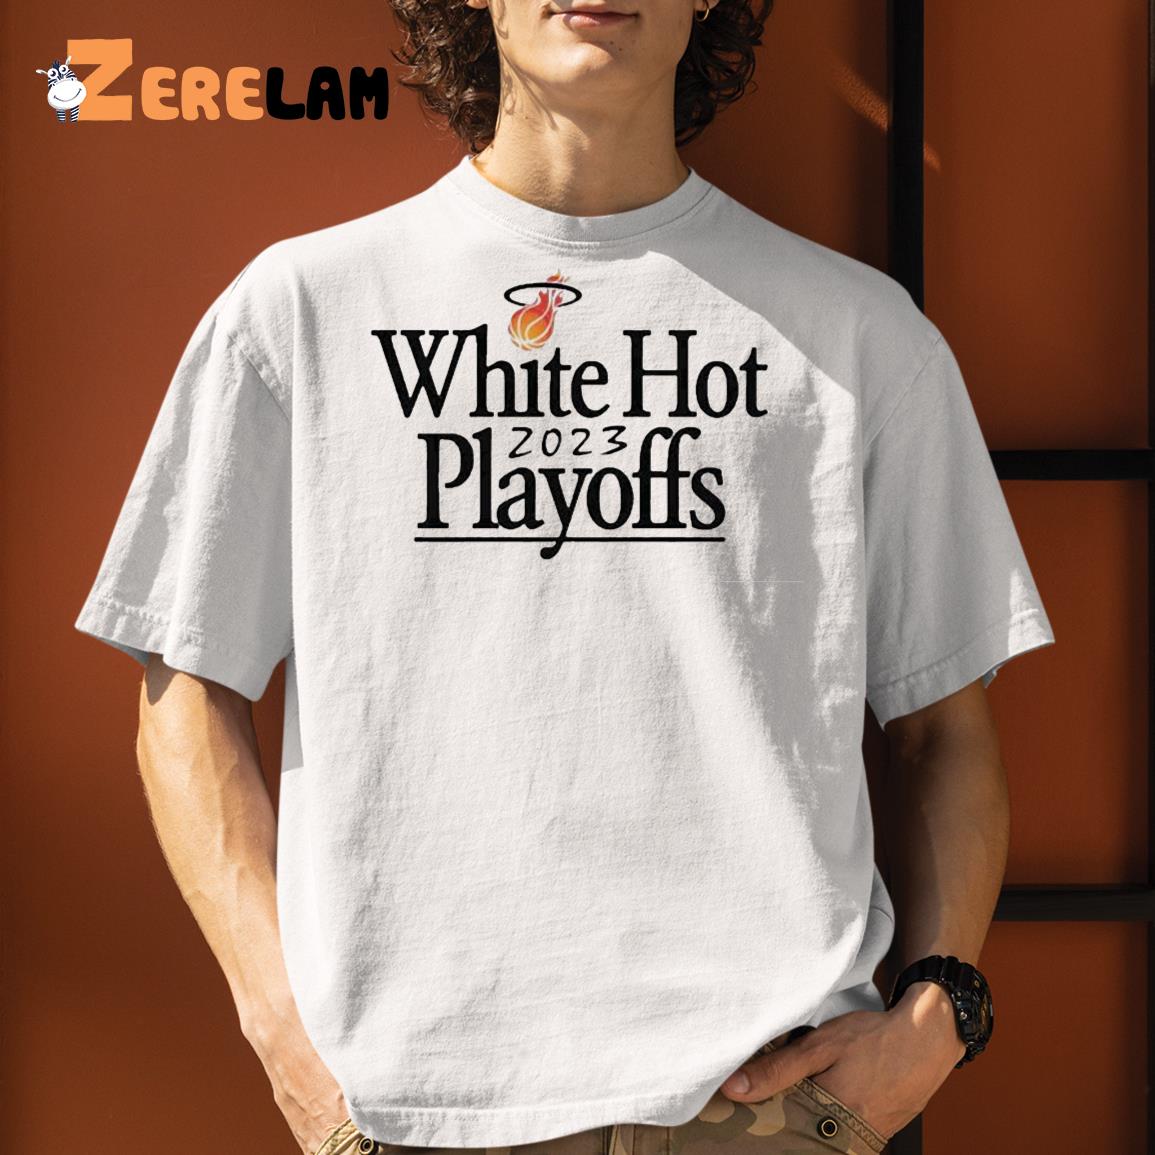 miami heat white hot shirt